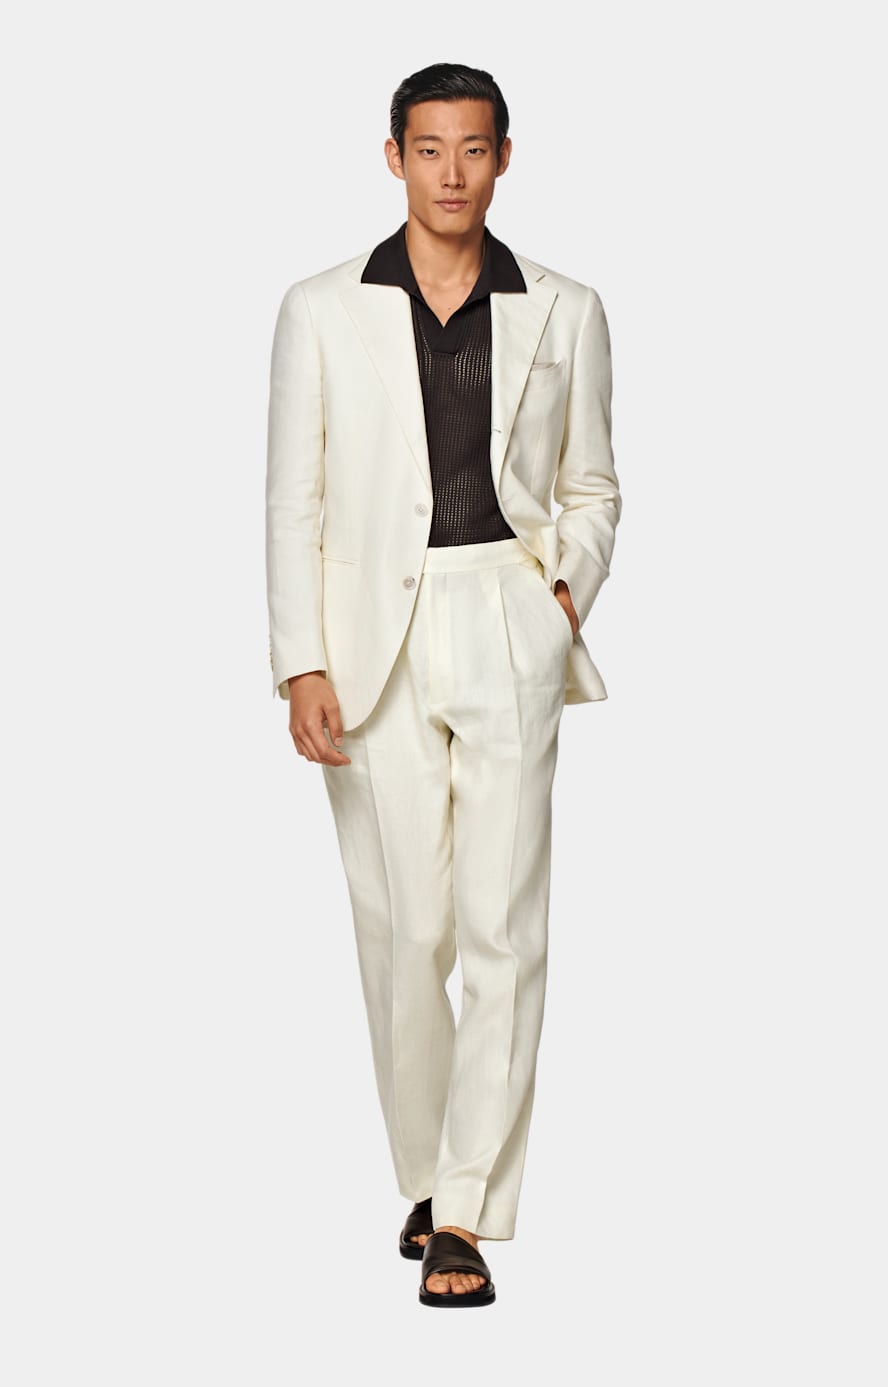 Classy White Tuxedo with black pants | Hockerty